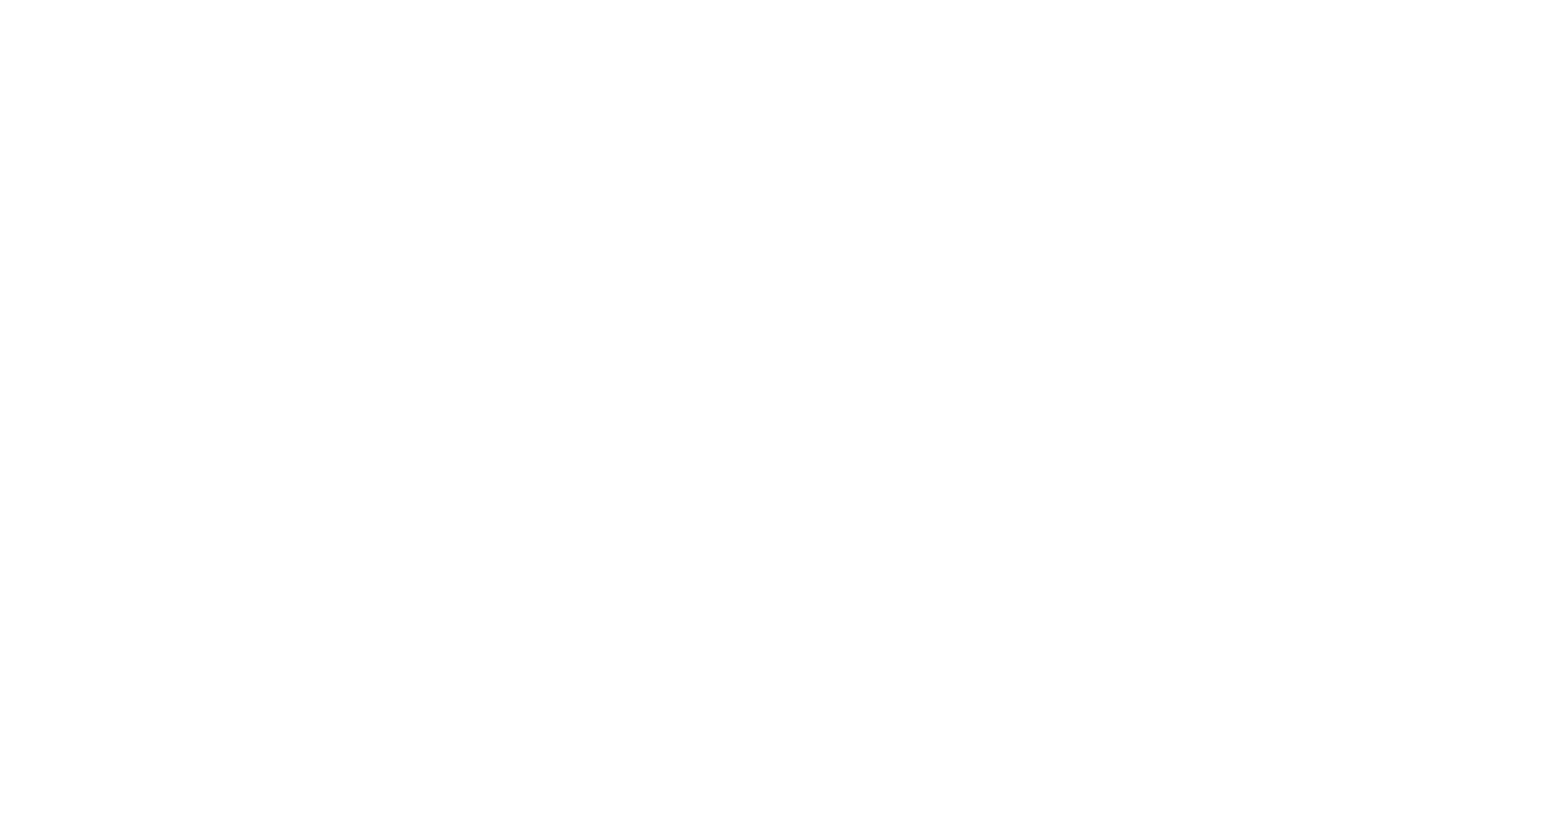 Reece Group logo large for dark backgrounds (transparent PNG)